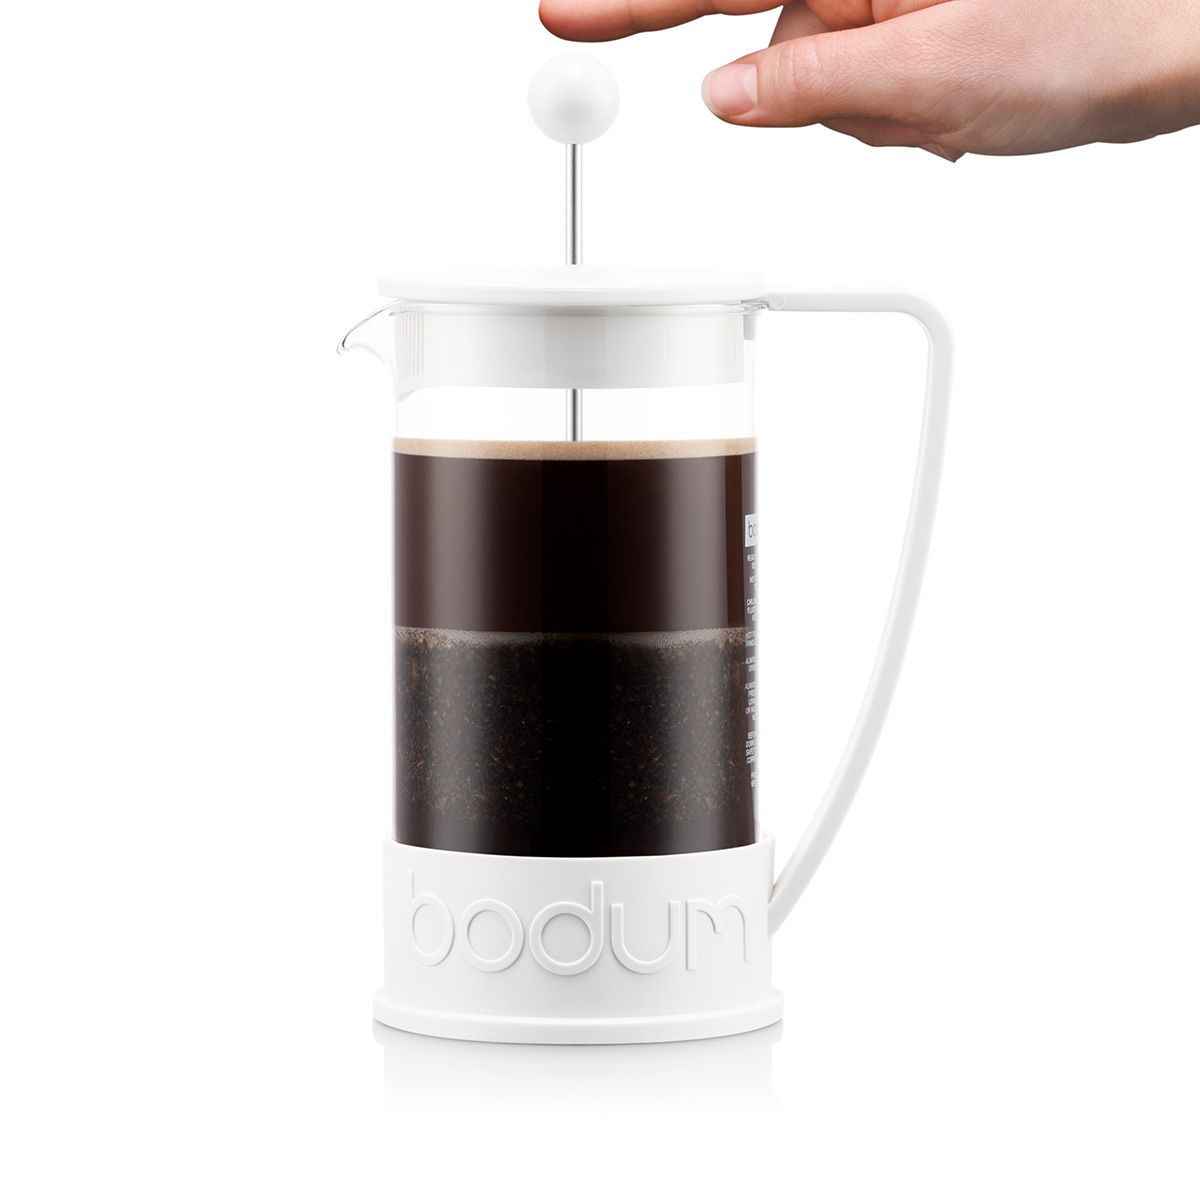 Bodum Brazil Coffee Maker Cream, 8 Cups